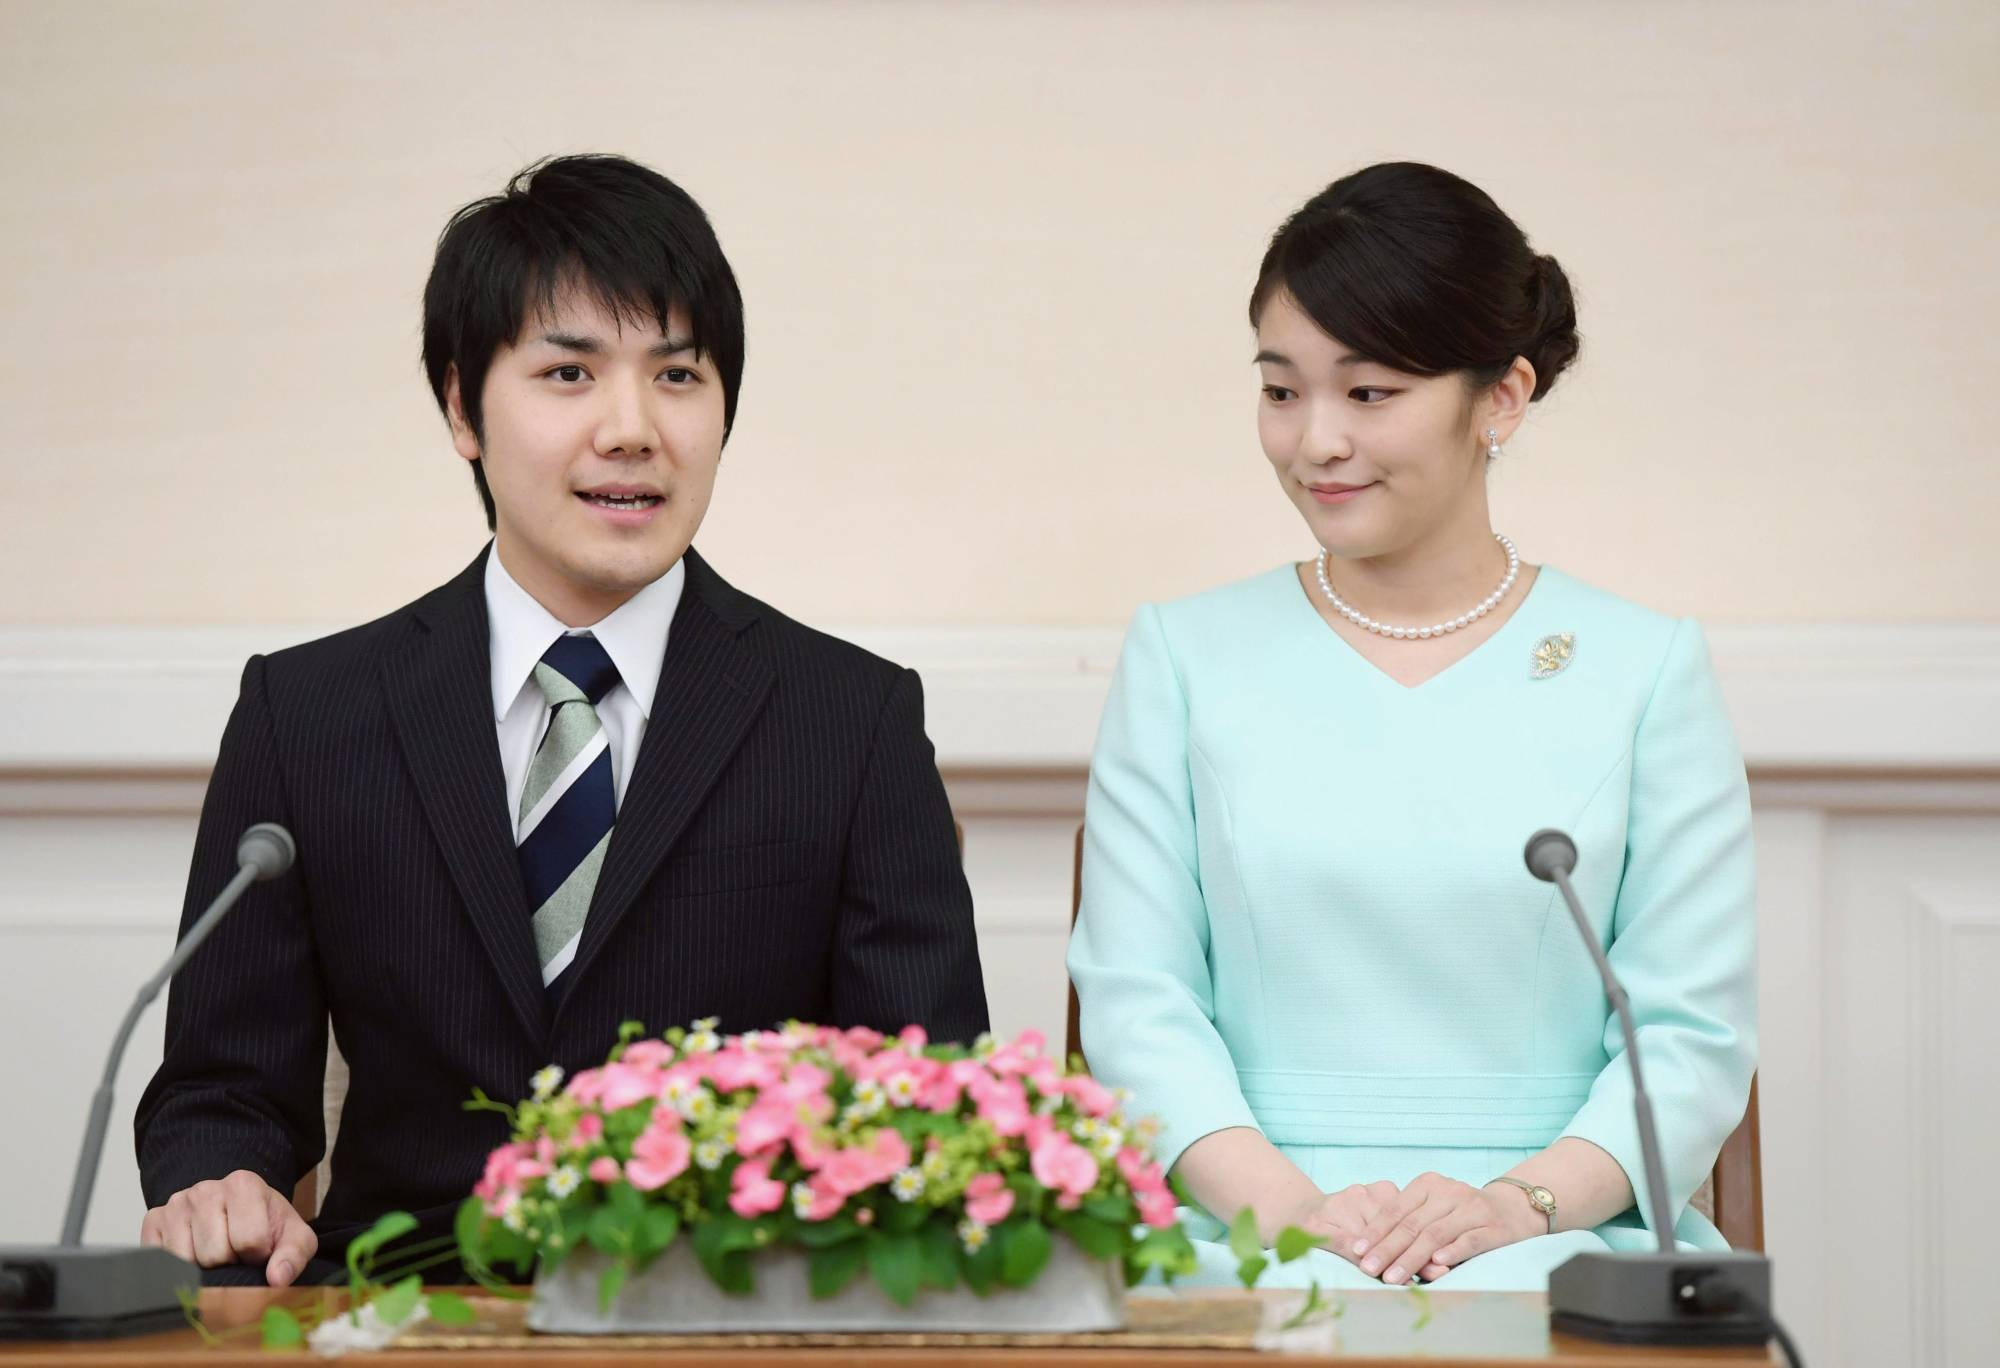 Princess Mako finally marries her "commoner" boyfriend, Kei Komuro, and gives up her royal status